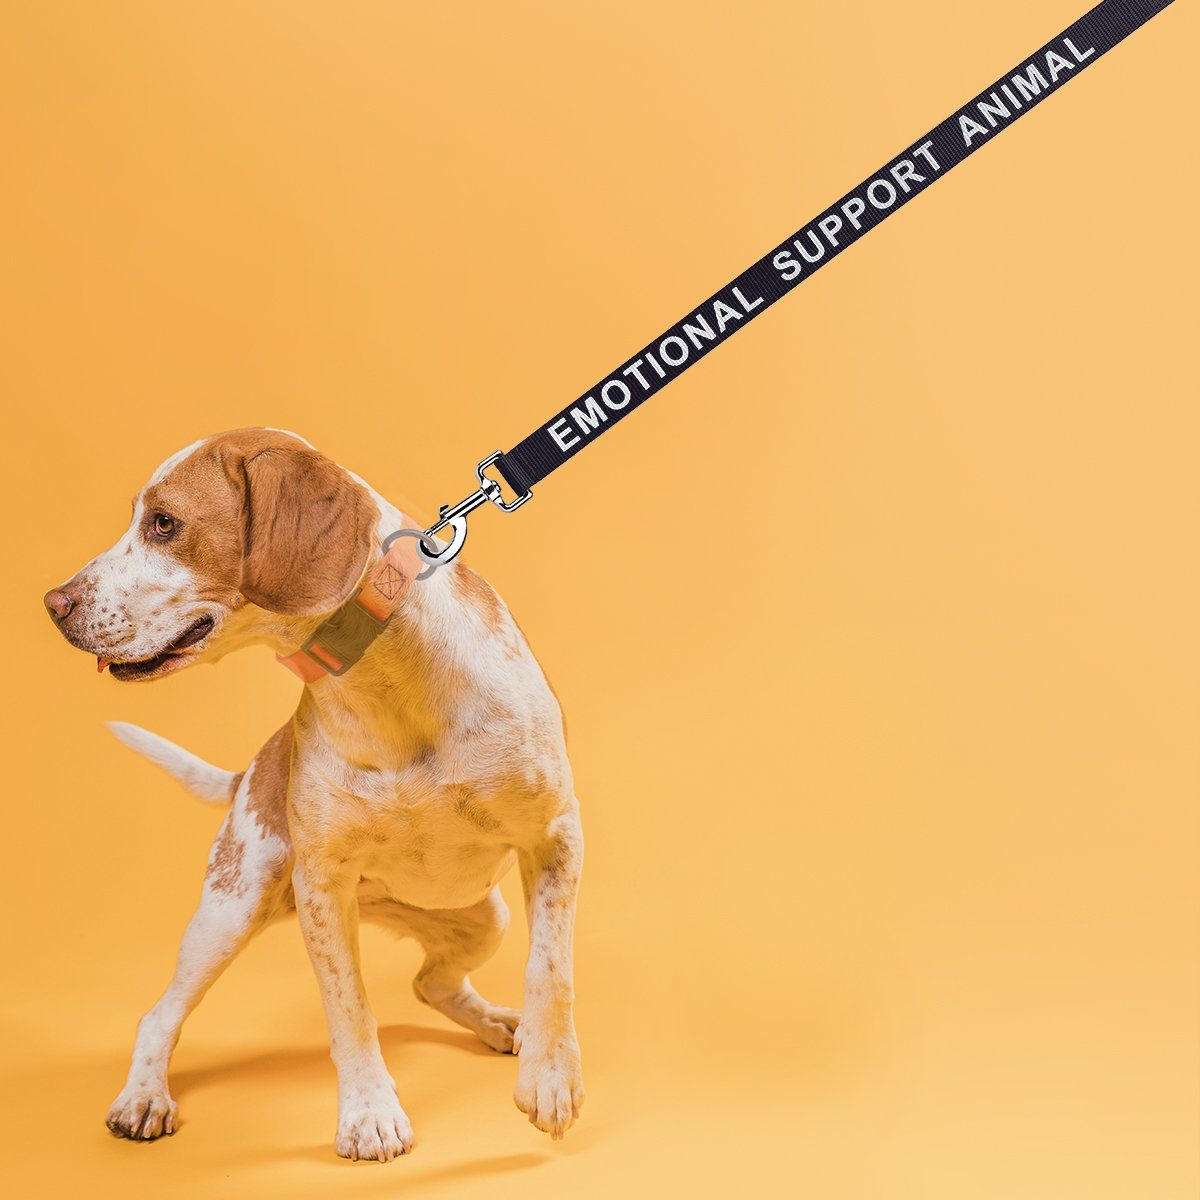 Reflective Red Nylon Leash - SERVICE DOG DO NOT PET